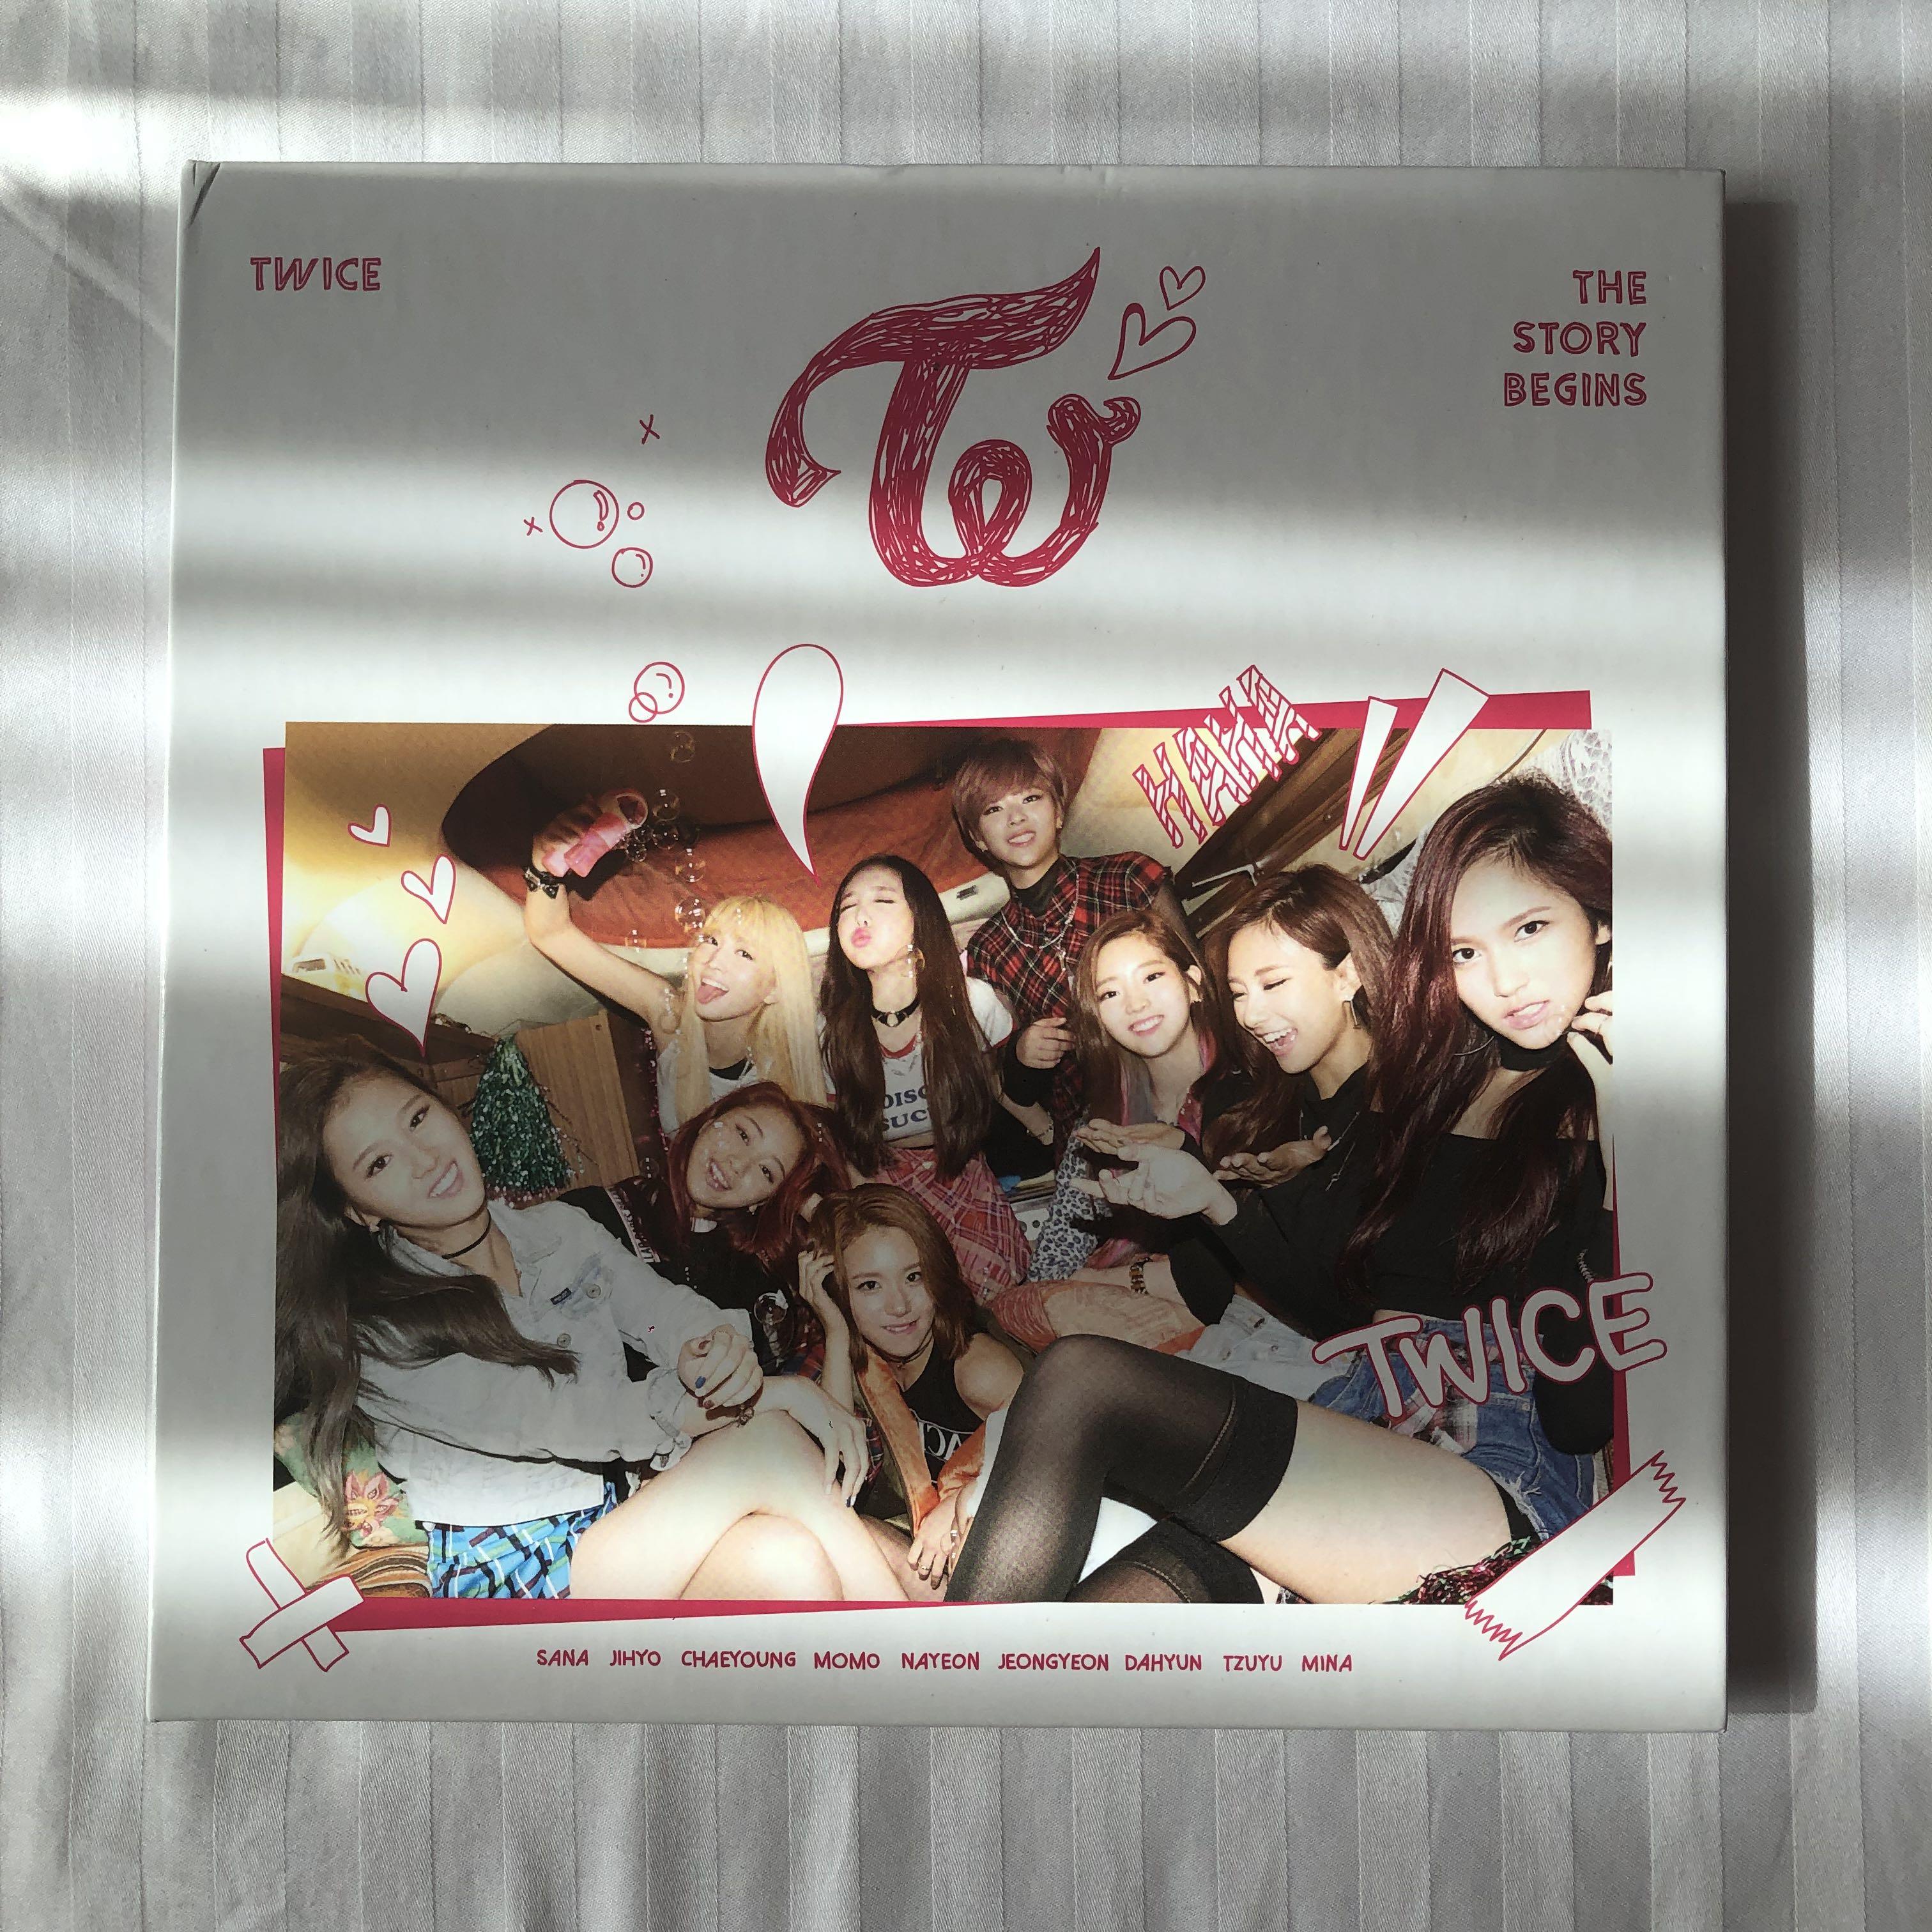 Twice Ooh Ahh Album Hobbies Toys Music Media Cds Dvds On Carousell